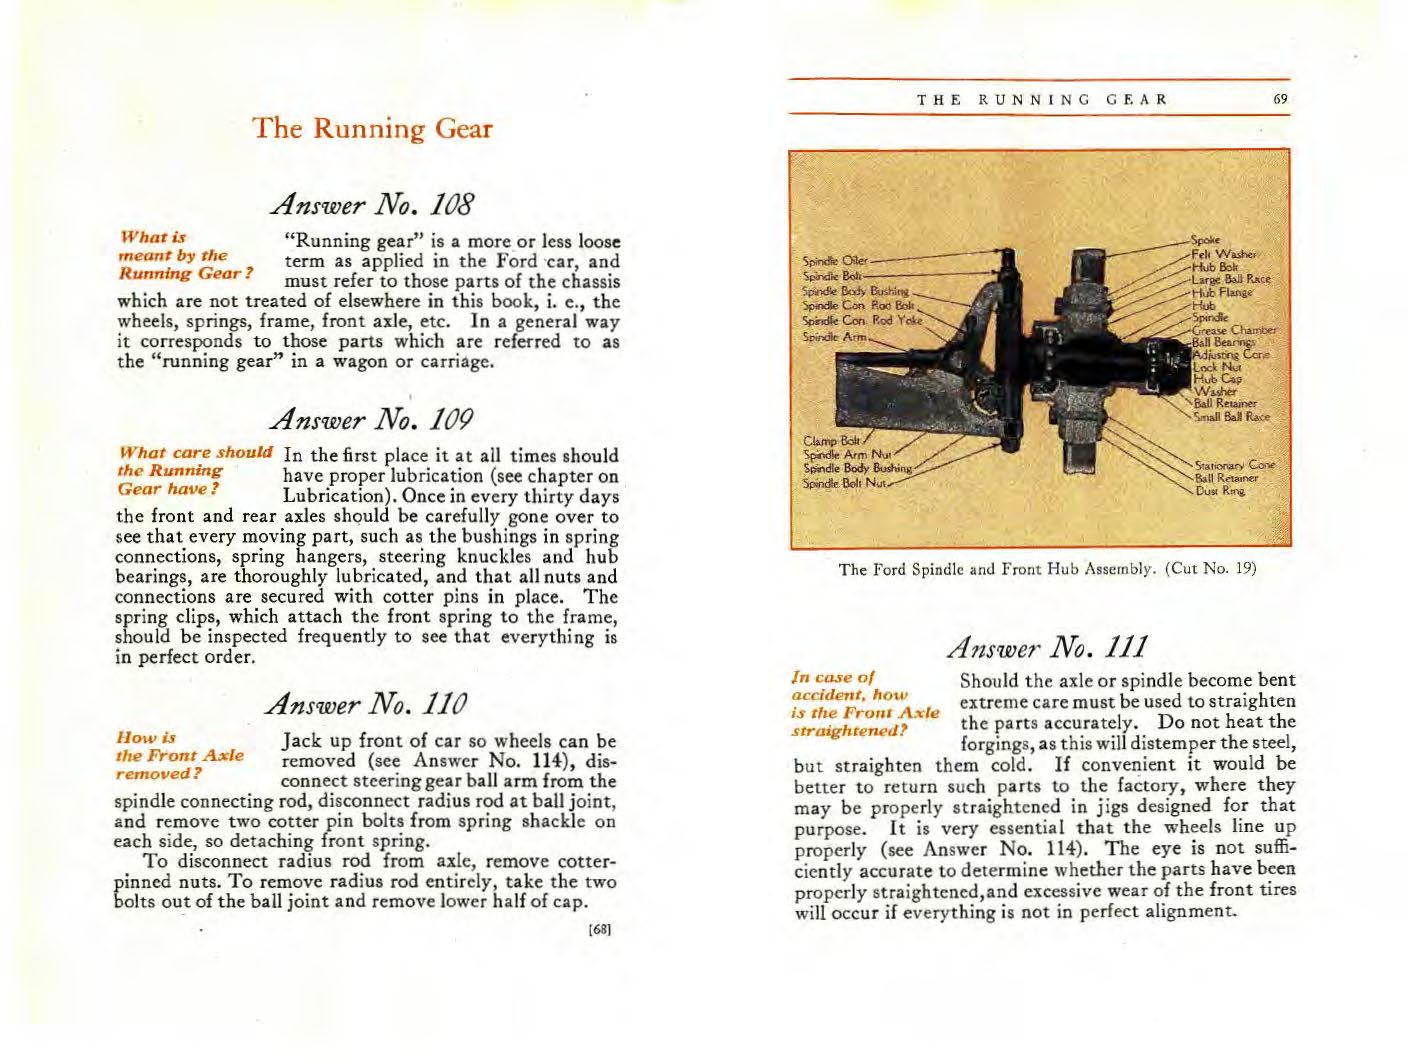 n_1915 Ford Owners Manual-68-69.jpg